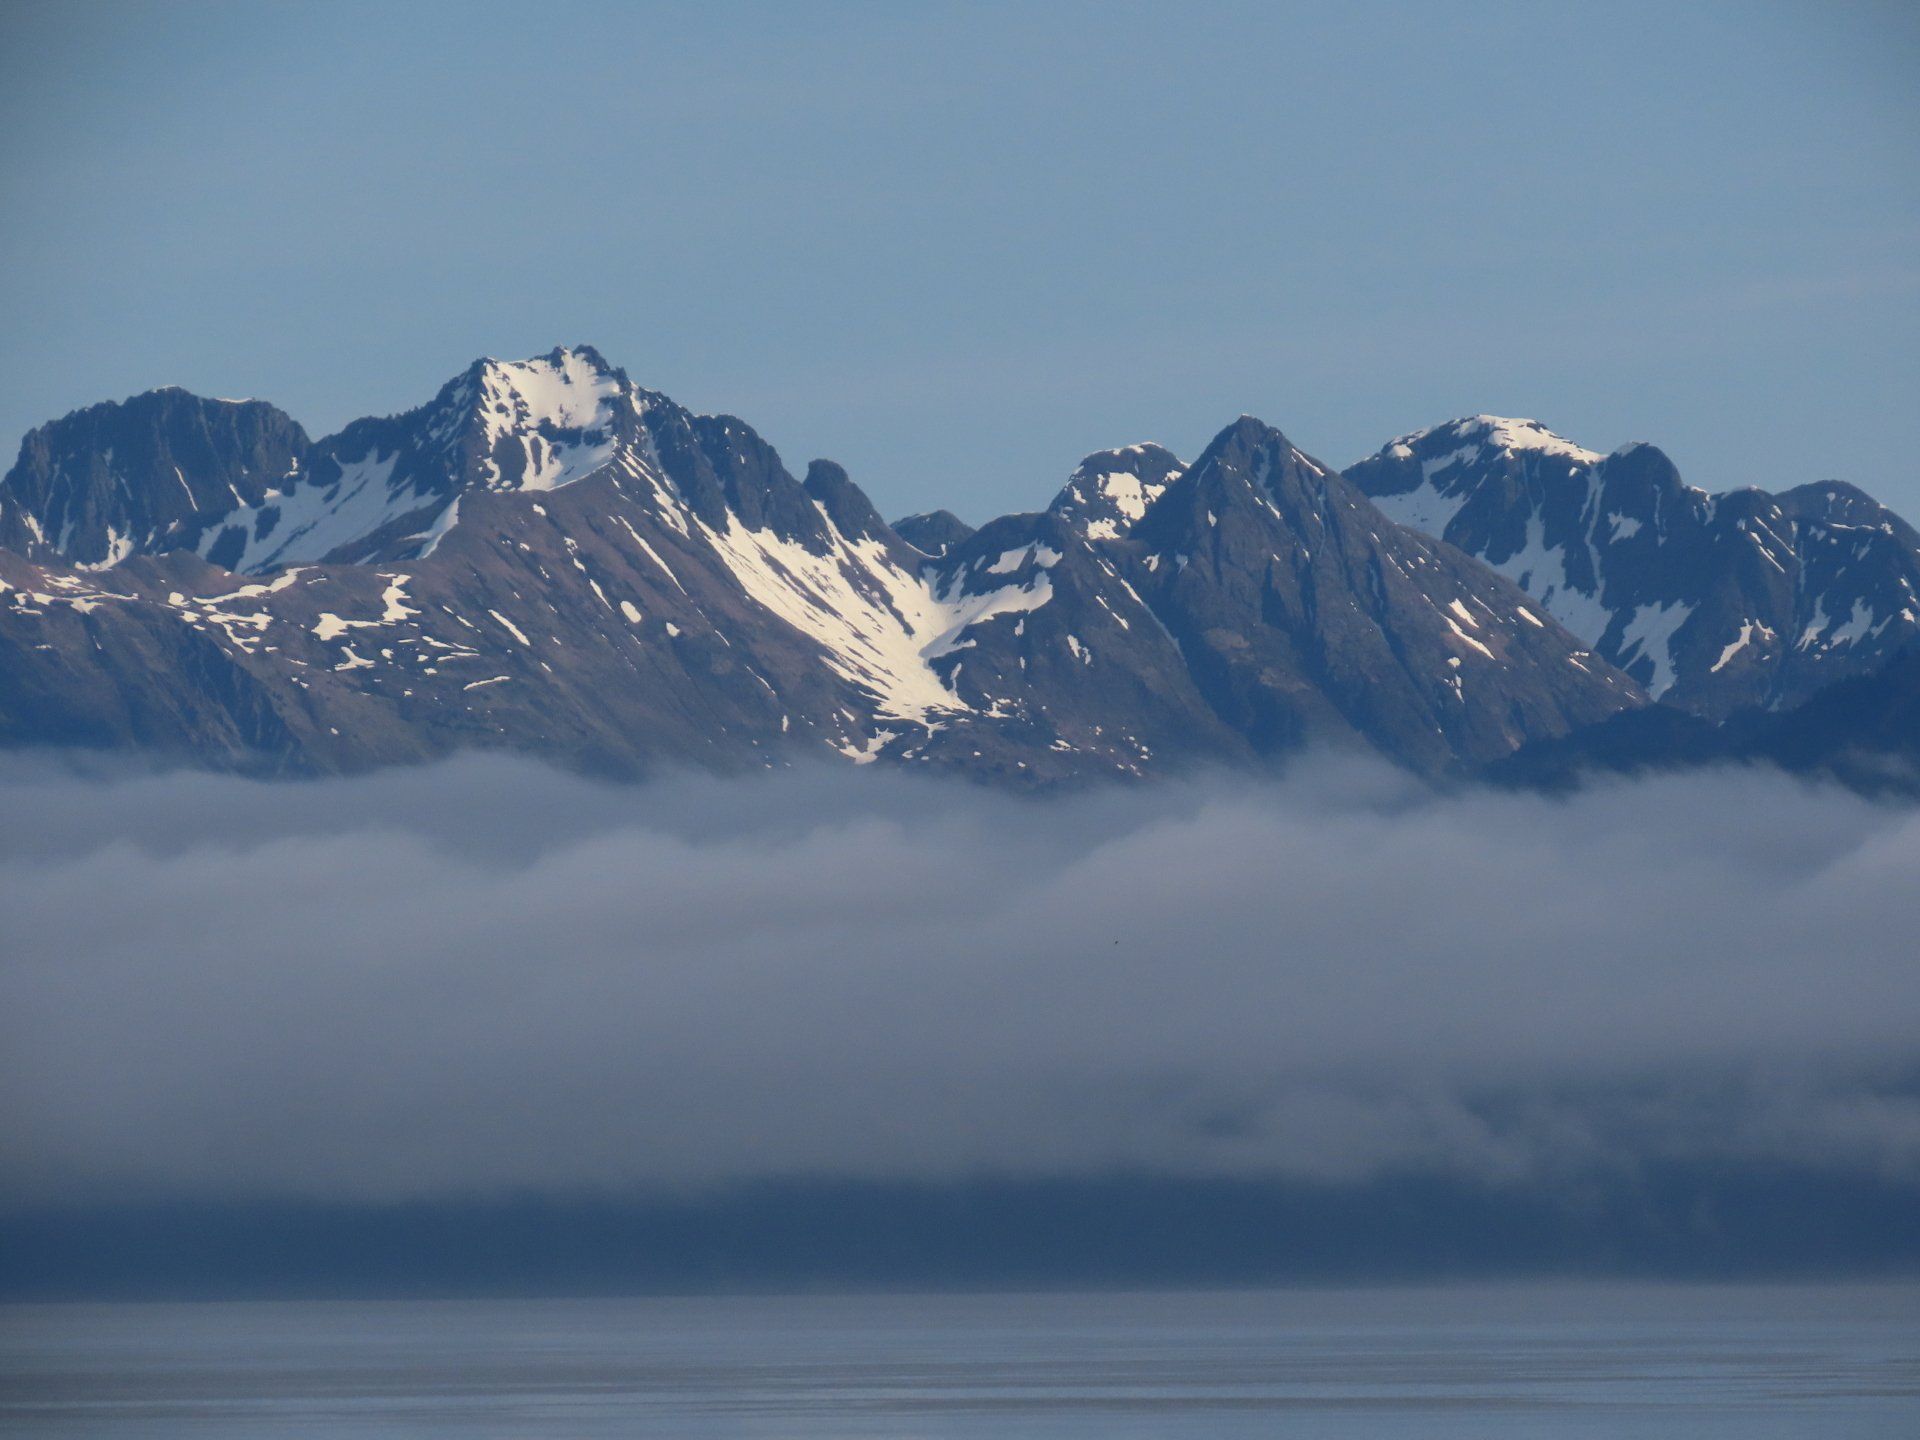 Royal Caribbean Alaska cruise and land tour Mountain and water views